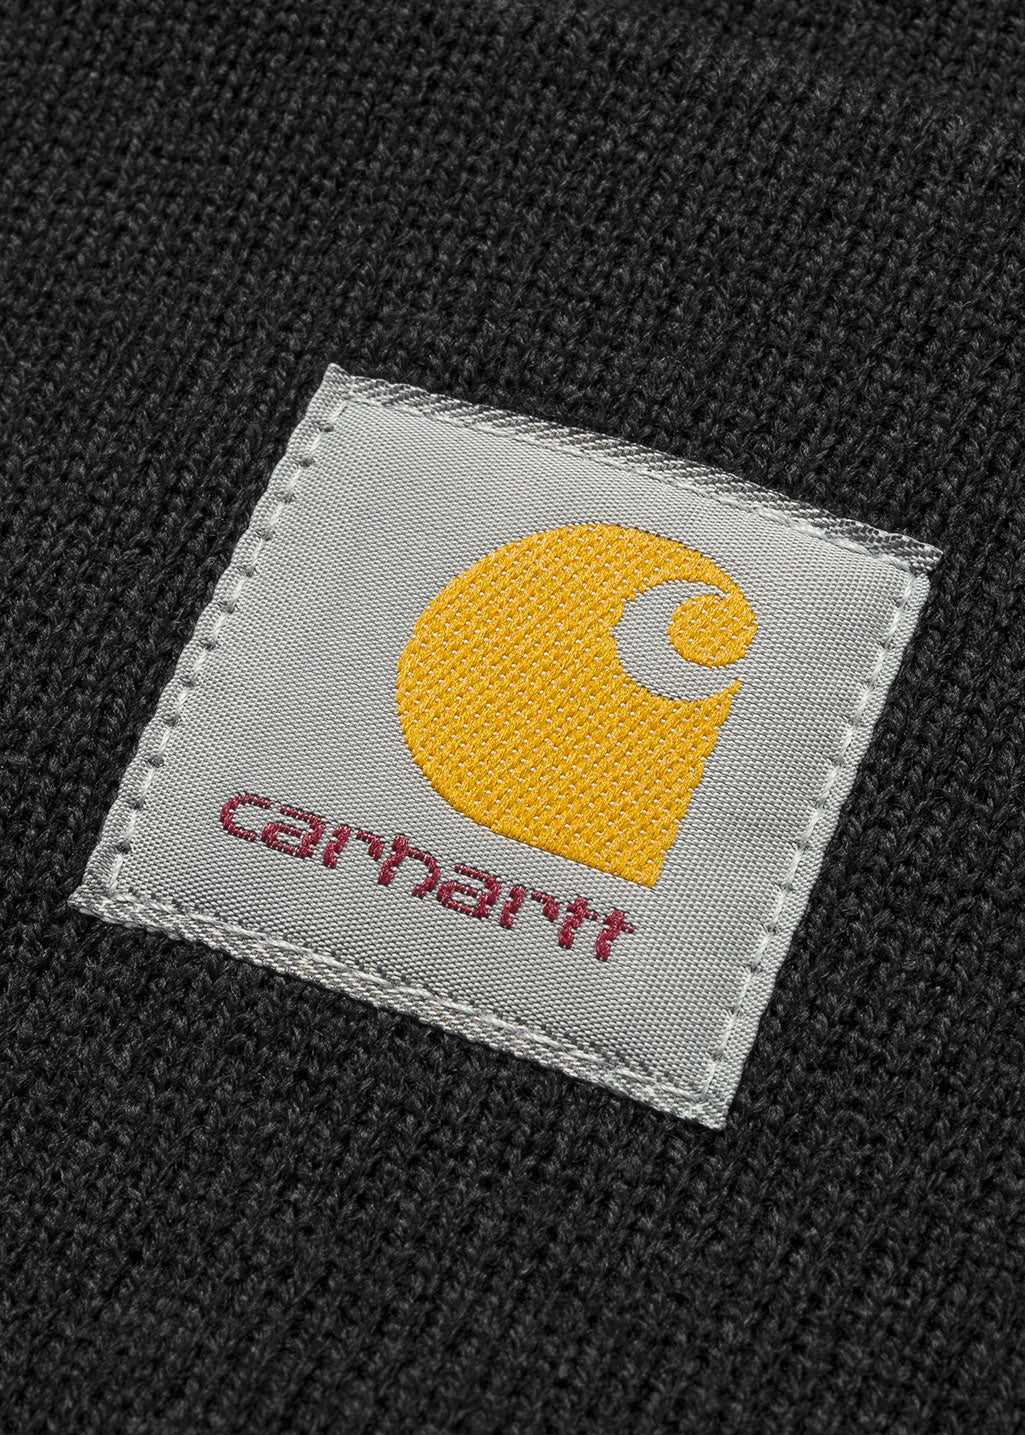 Carhartt WIP - Acrylic Watch Hat - Black - Hardpressed Print Studio